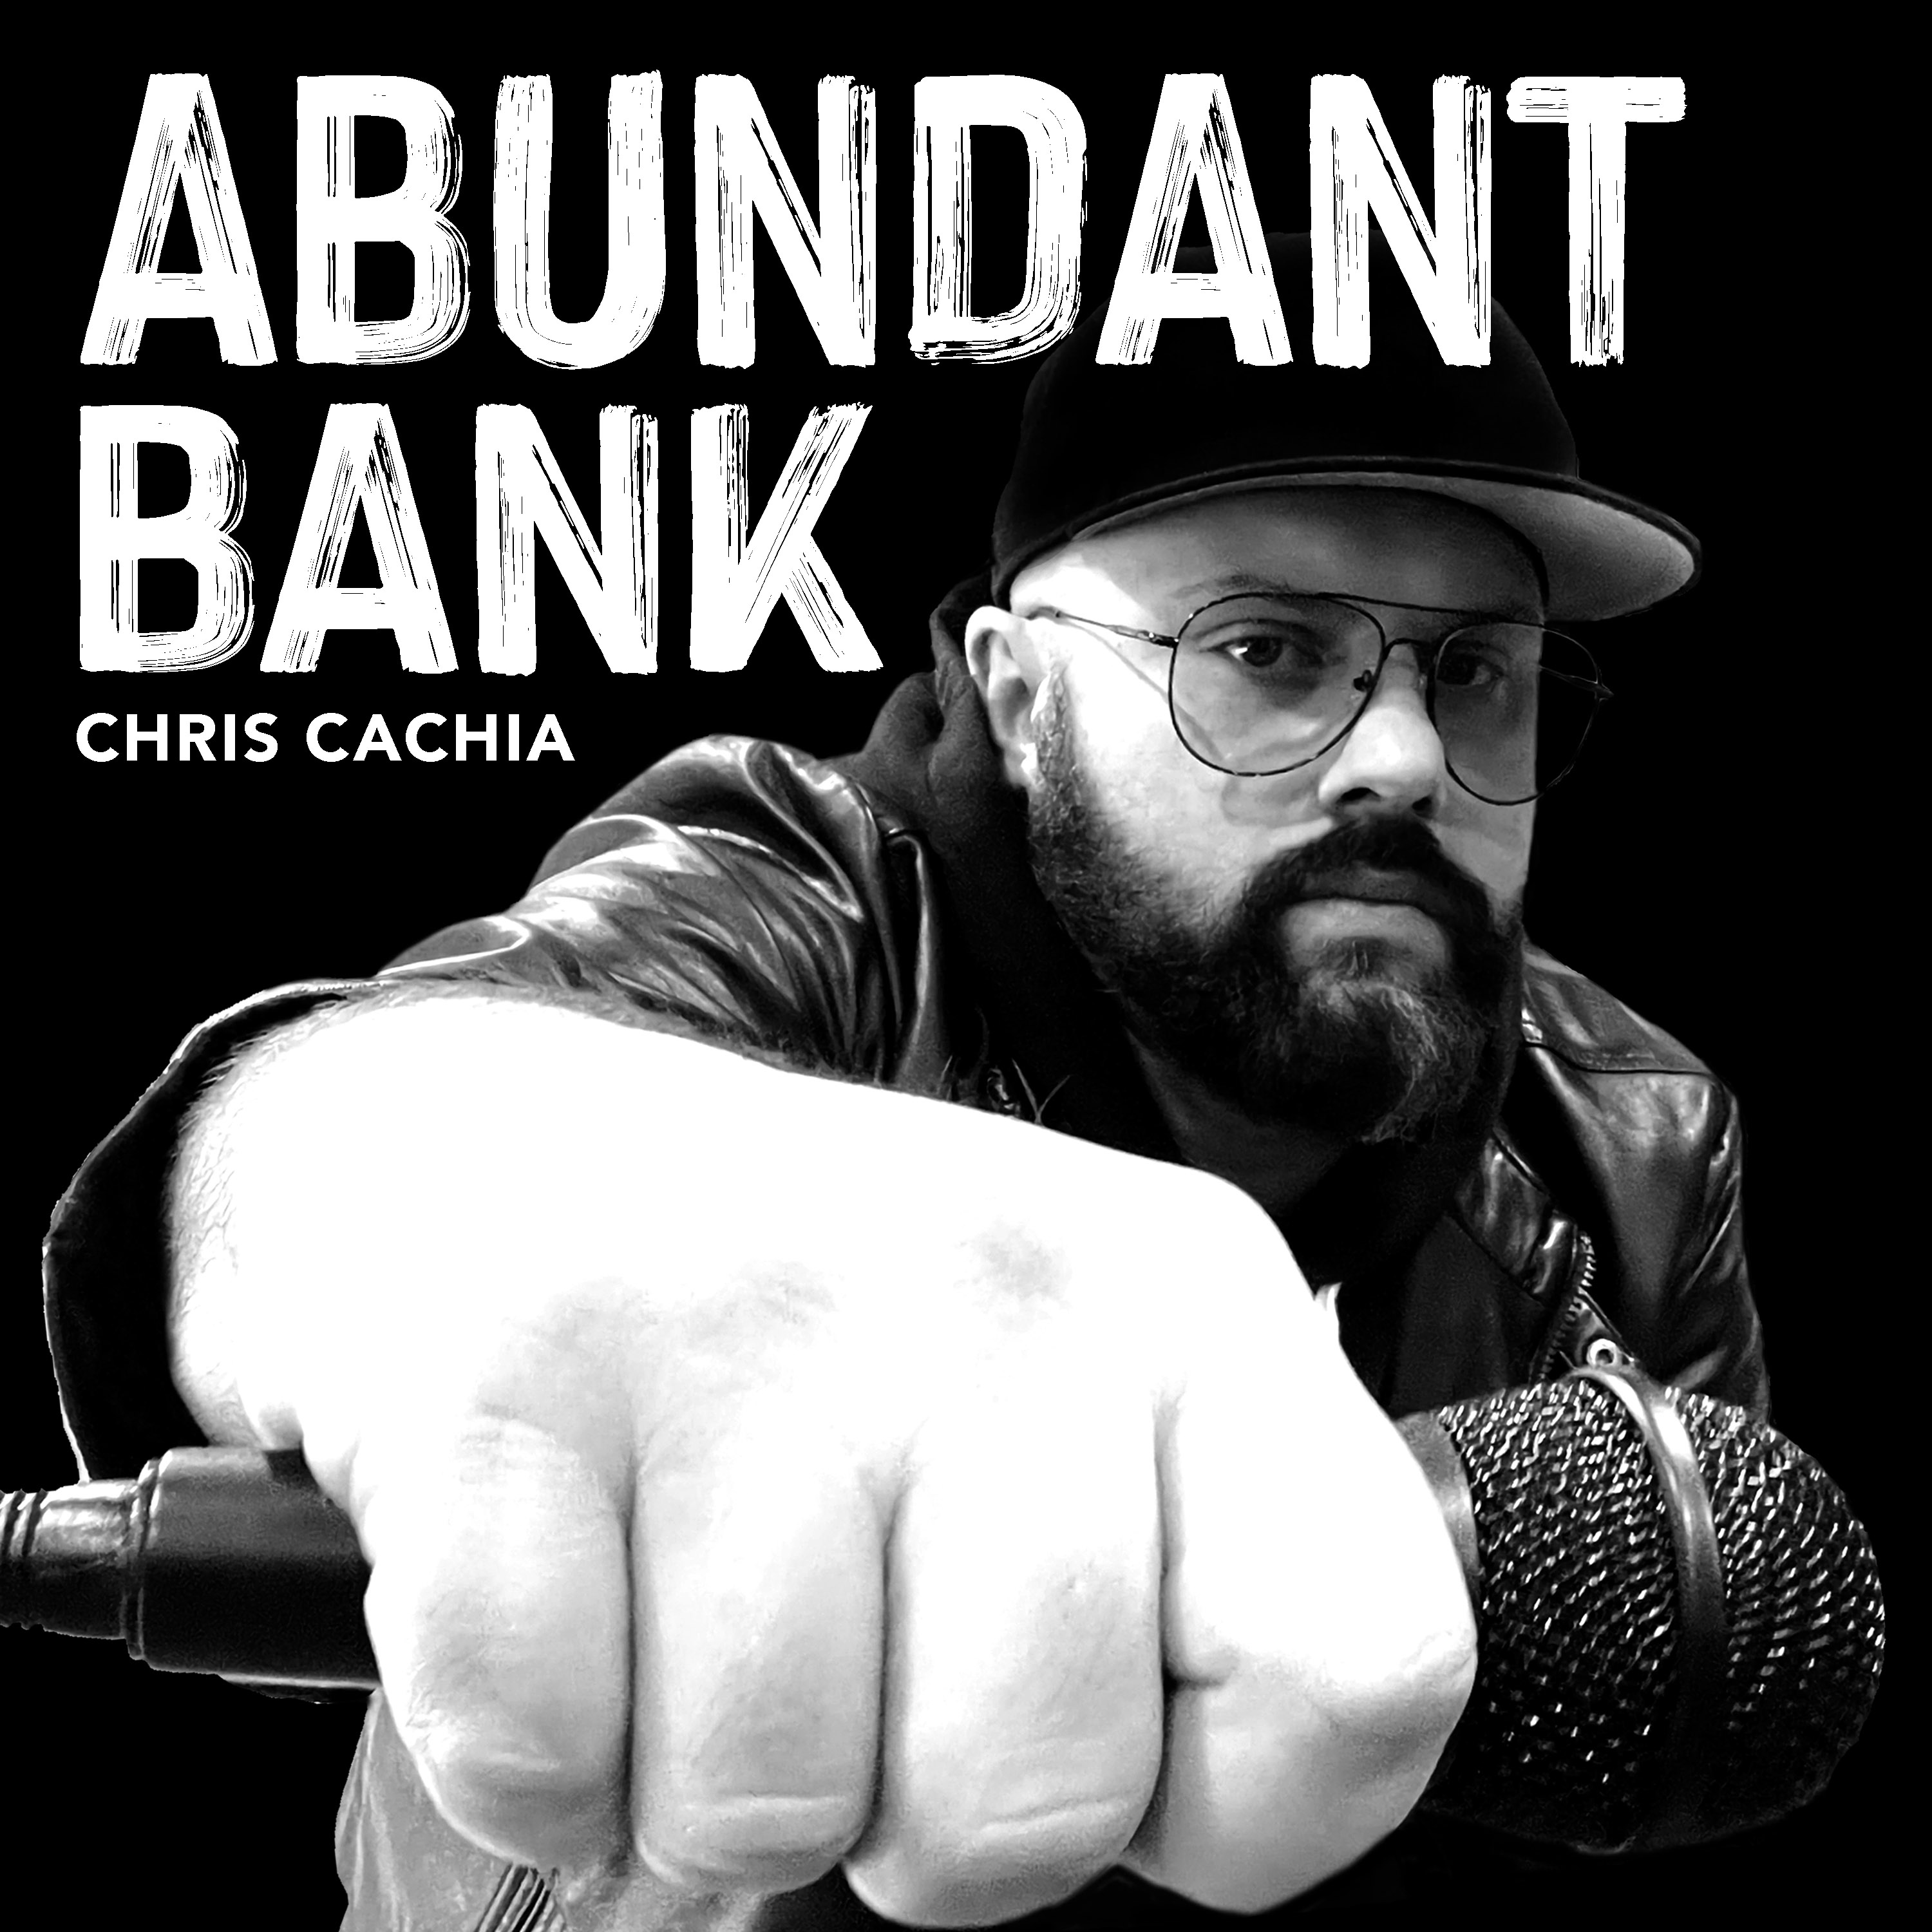 Chris Cachia Channels Old-School MC Energy with Modern Hip Hop on “Abundant Bank”